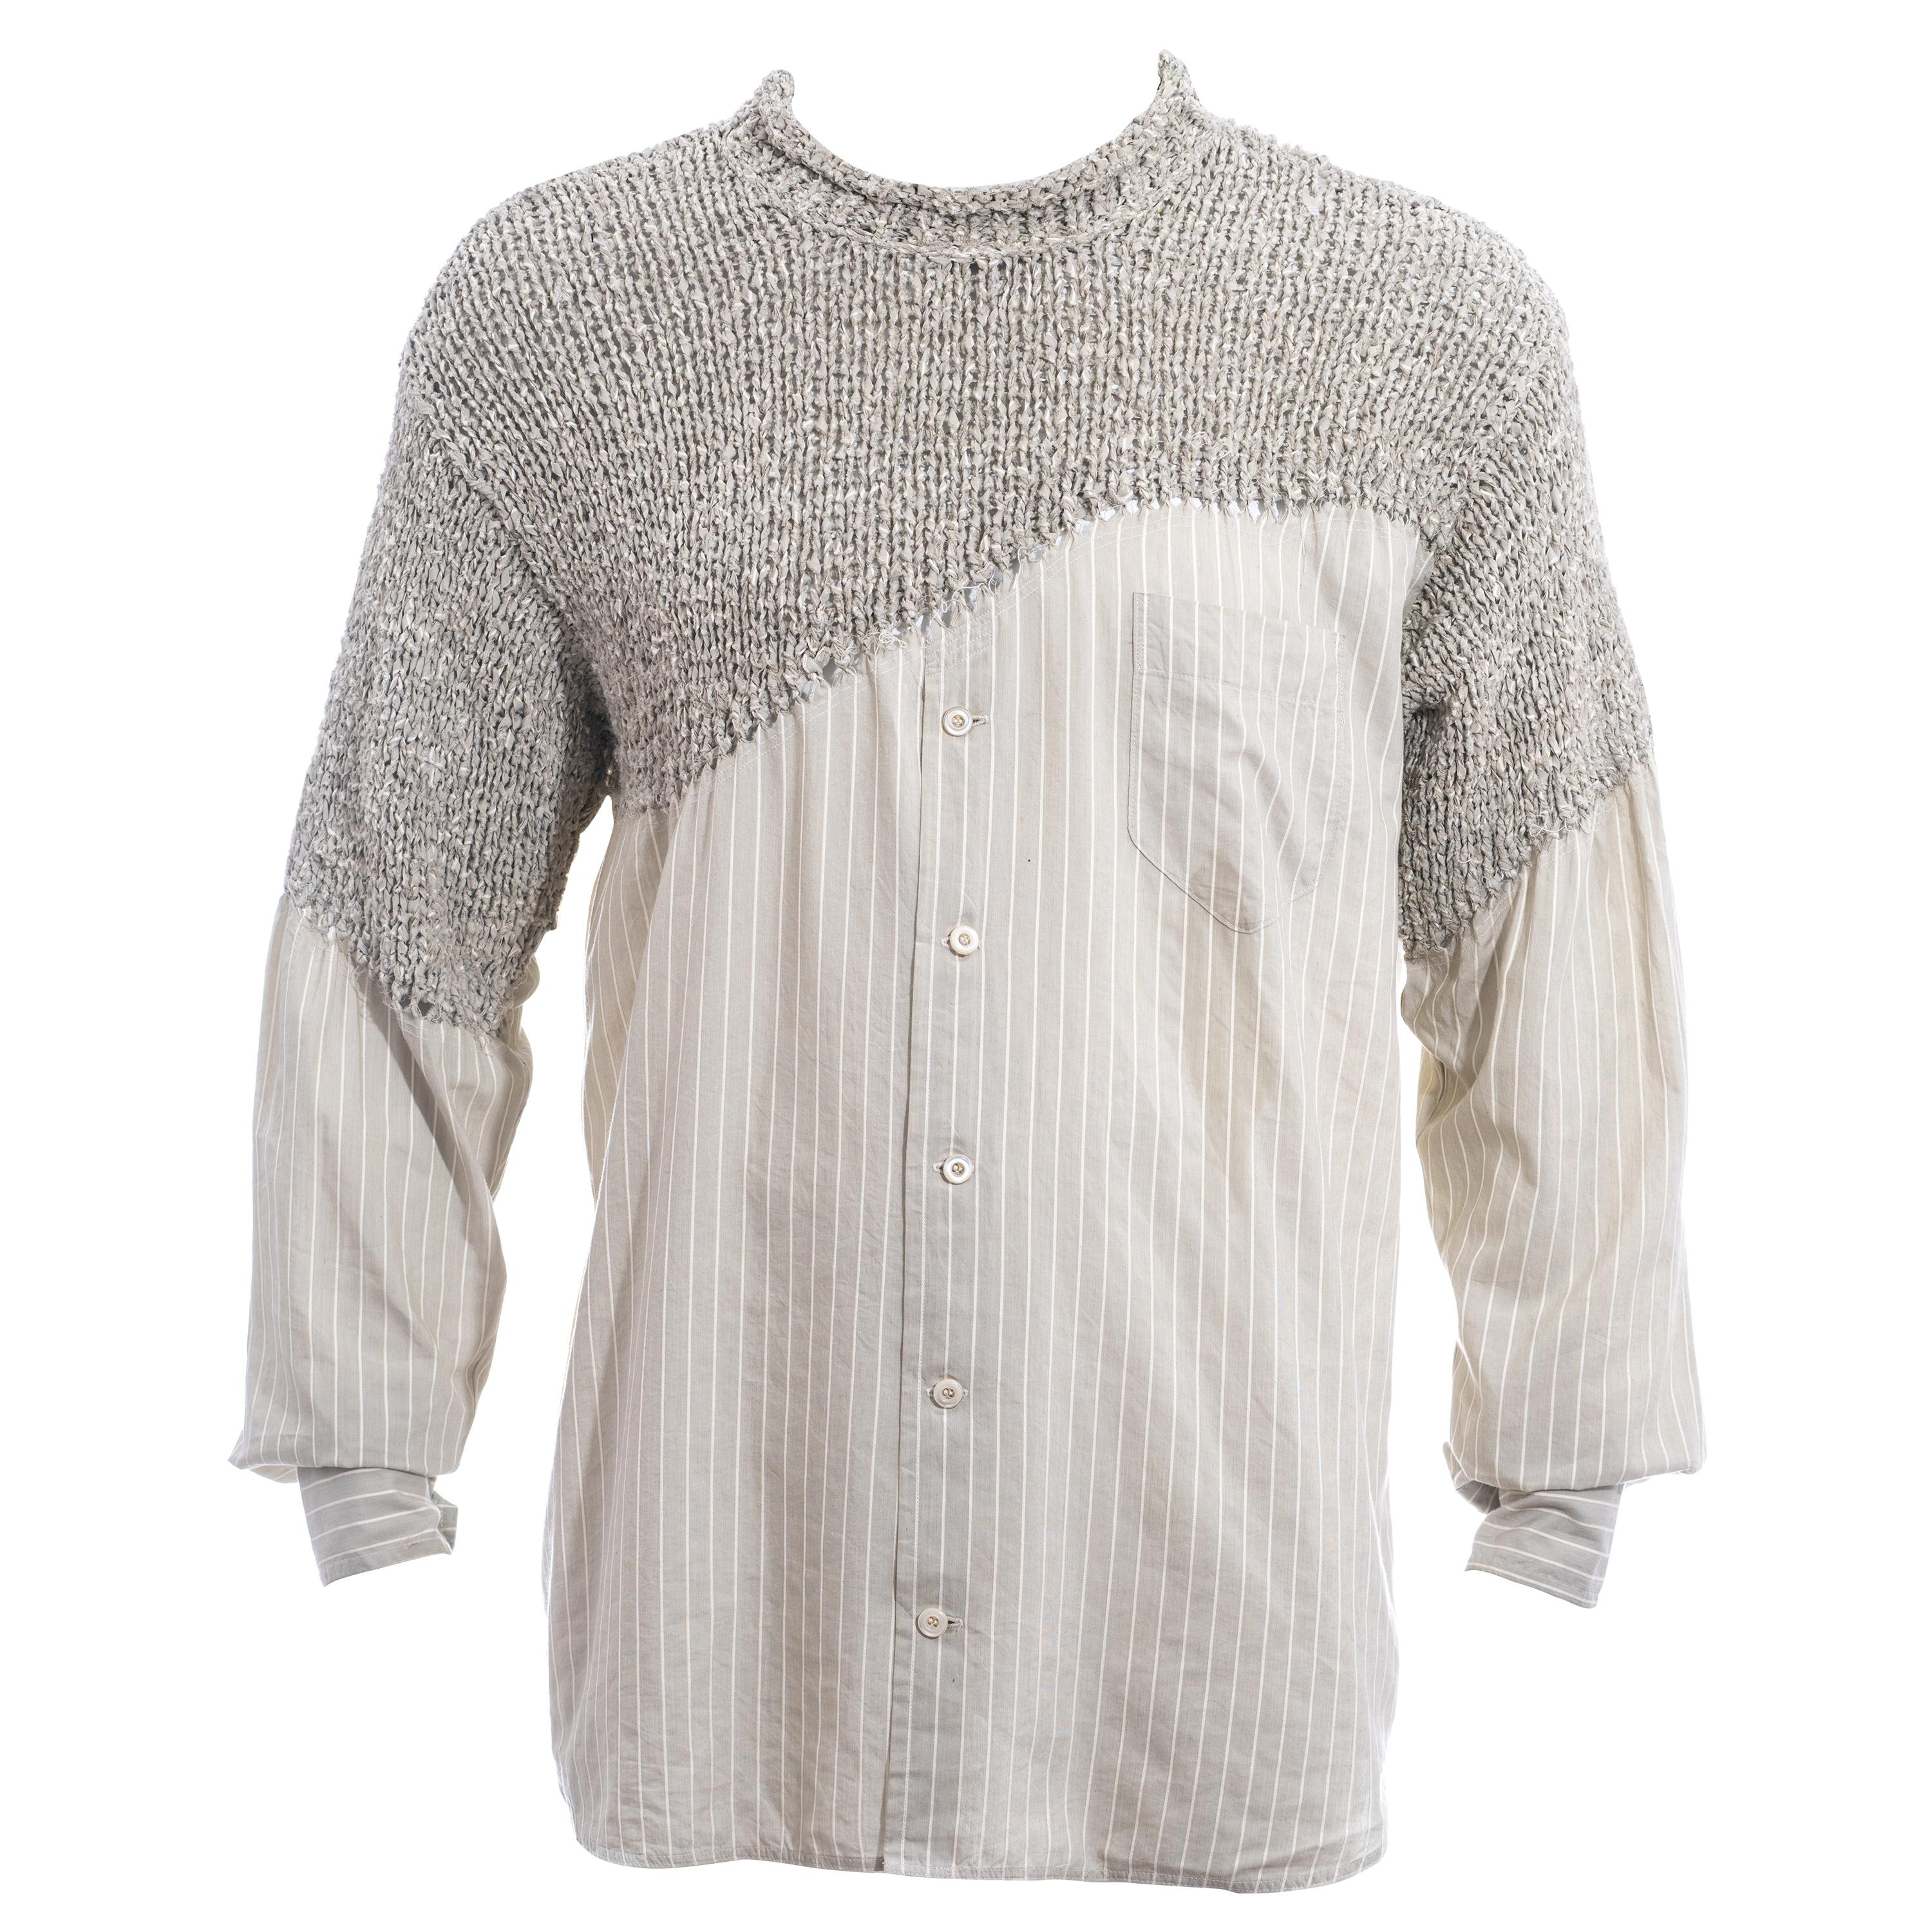 Men's Matsuda grey striped knitted cotton shirt sweater, ss 1995